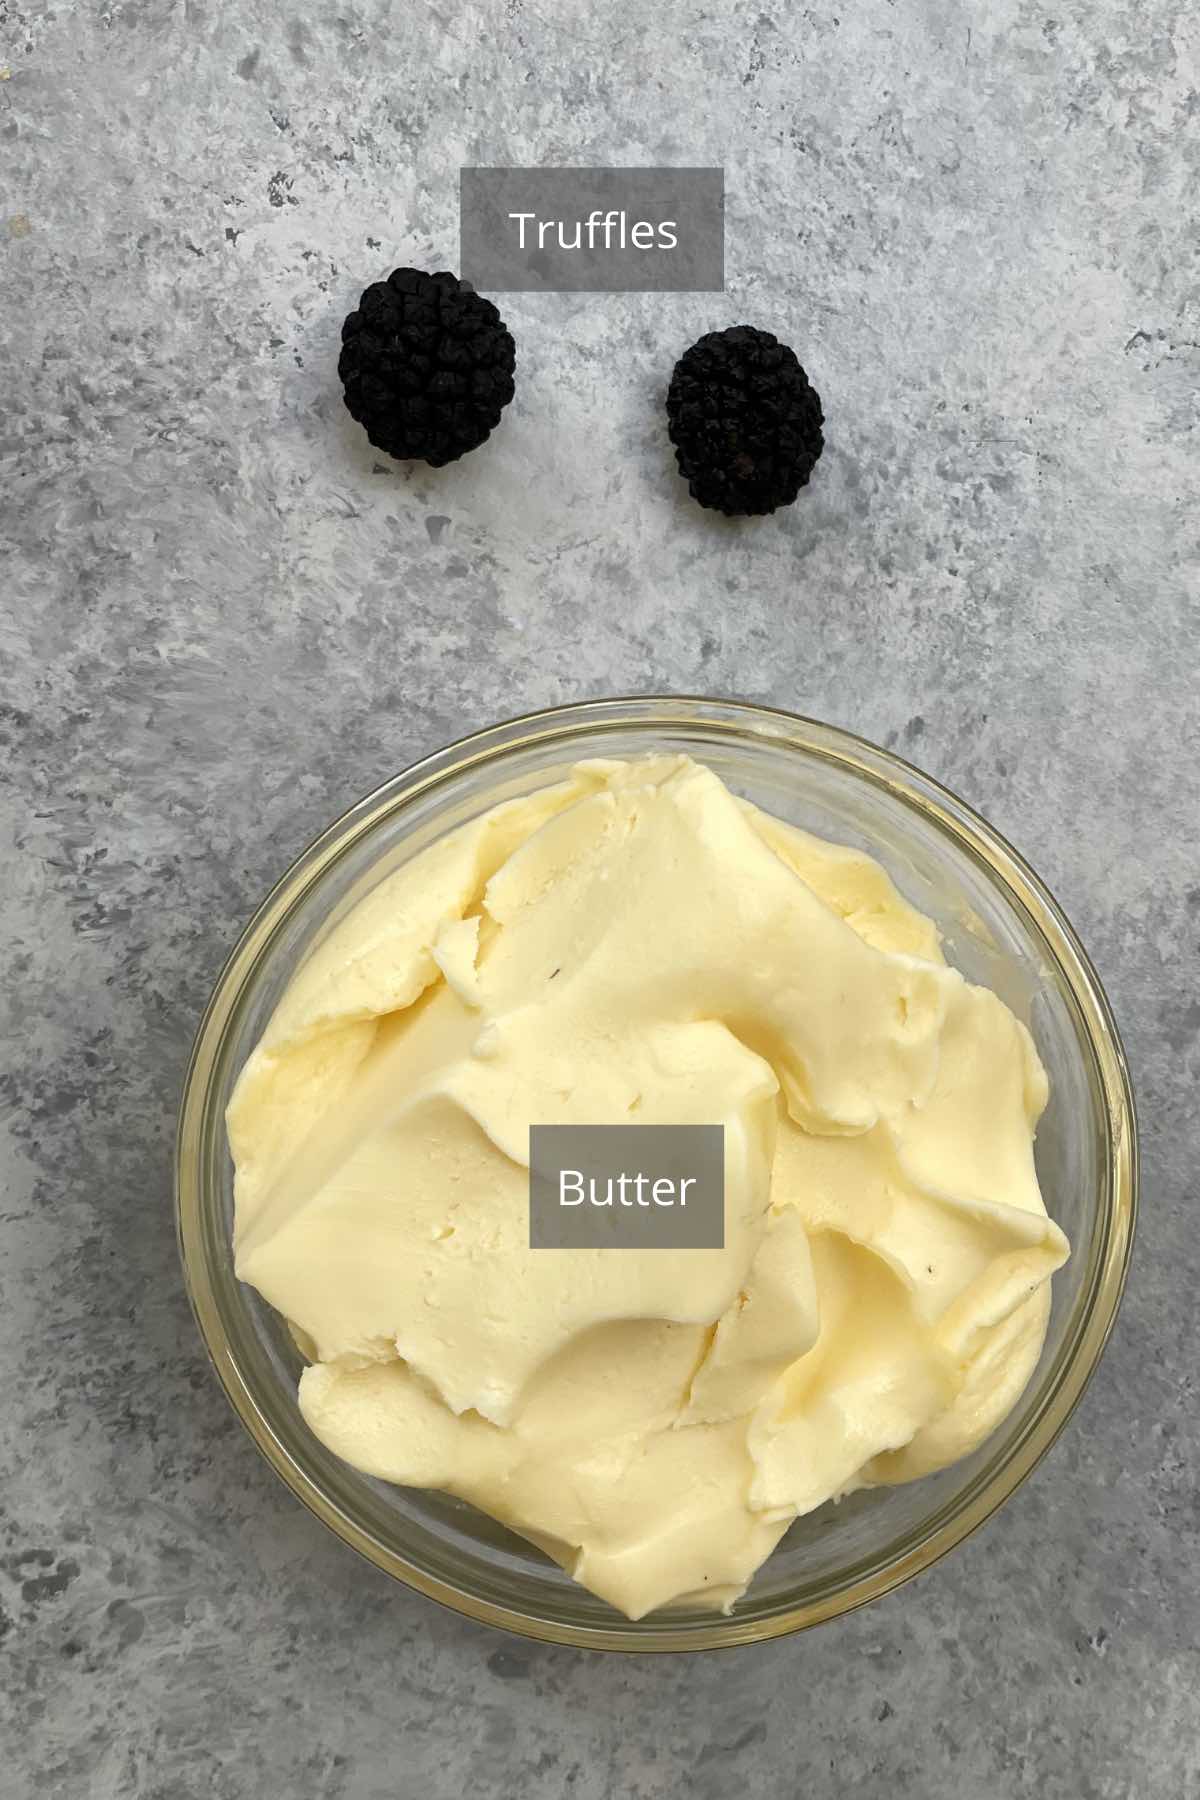 Truffle butter ingredients.